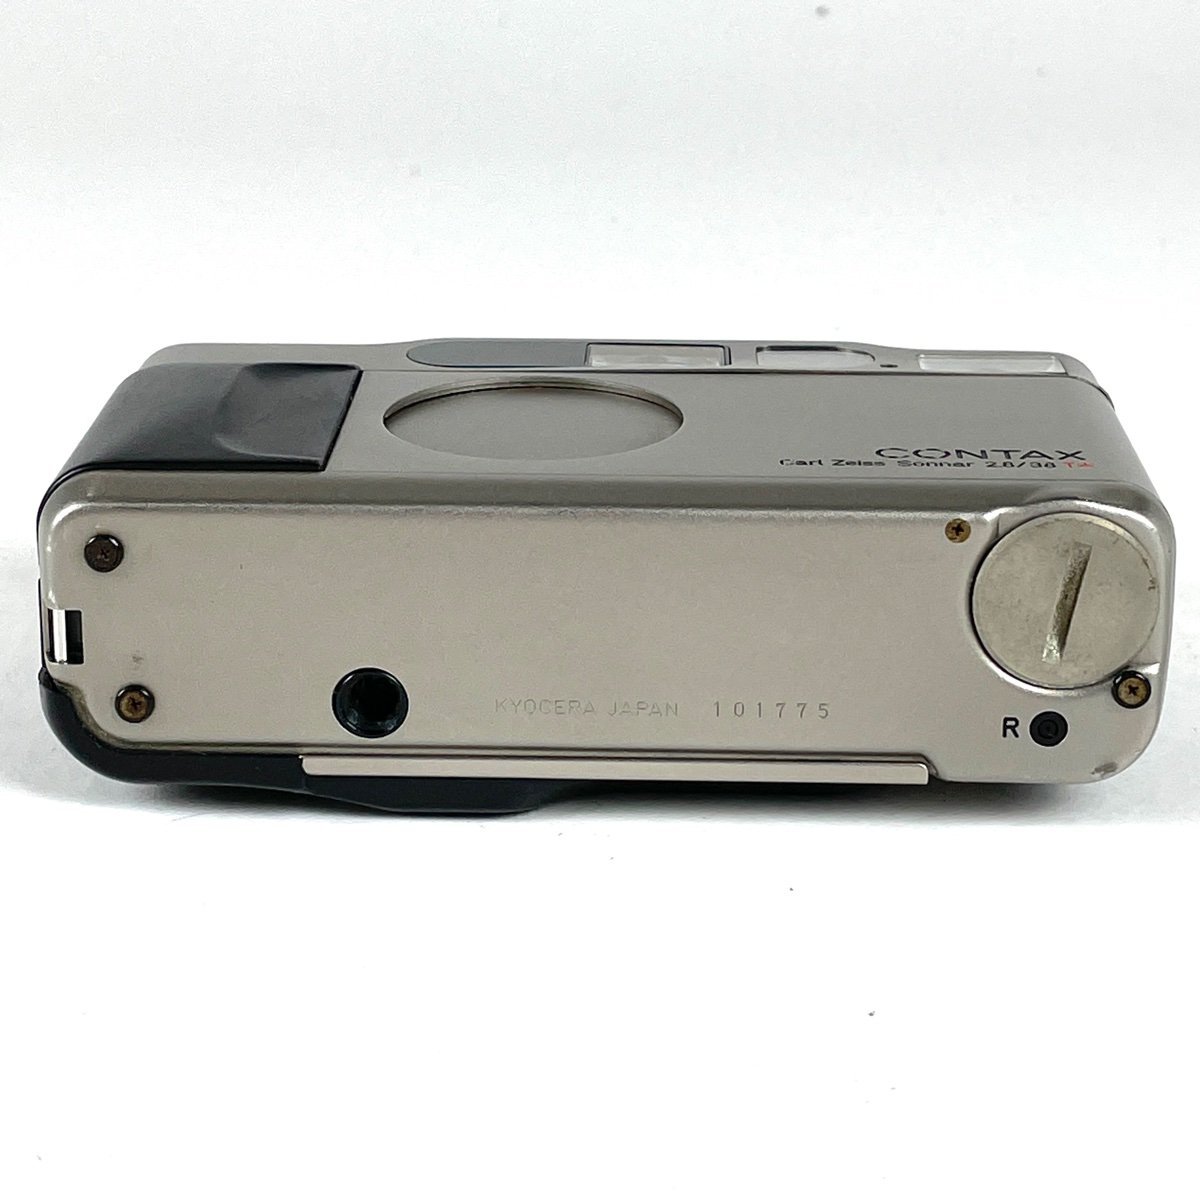  Contax CONTAX T2 titanium silver [ junk ] film compact camera [ used ]